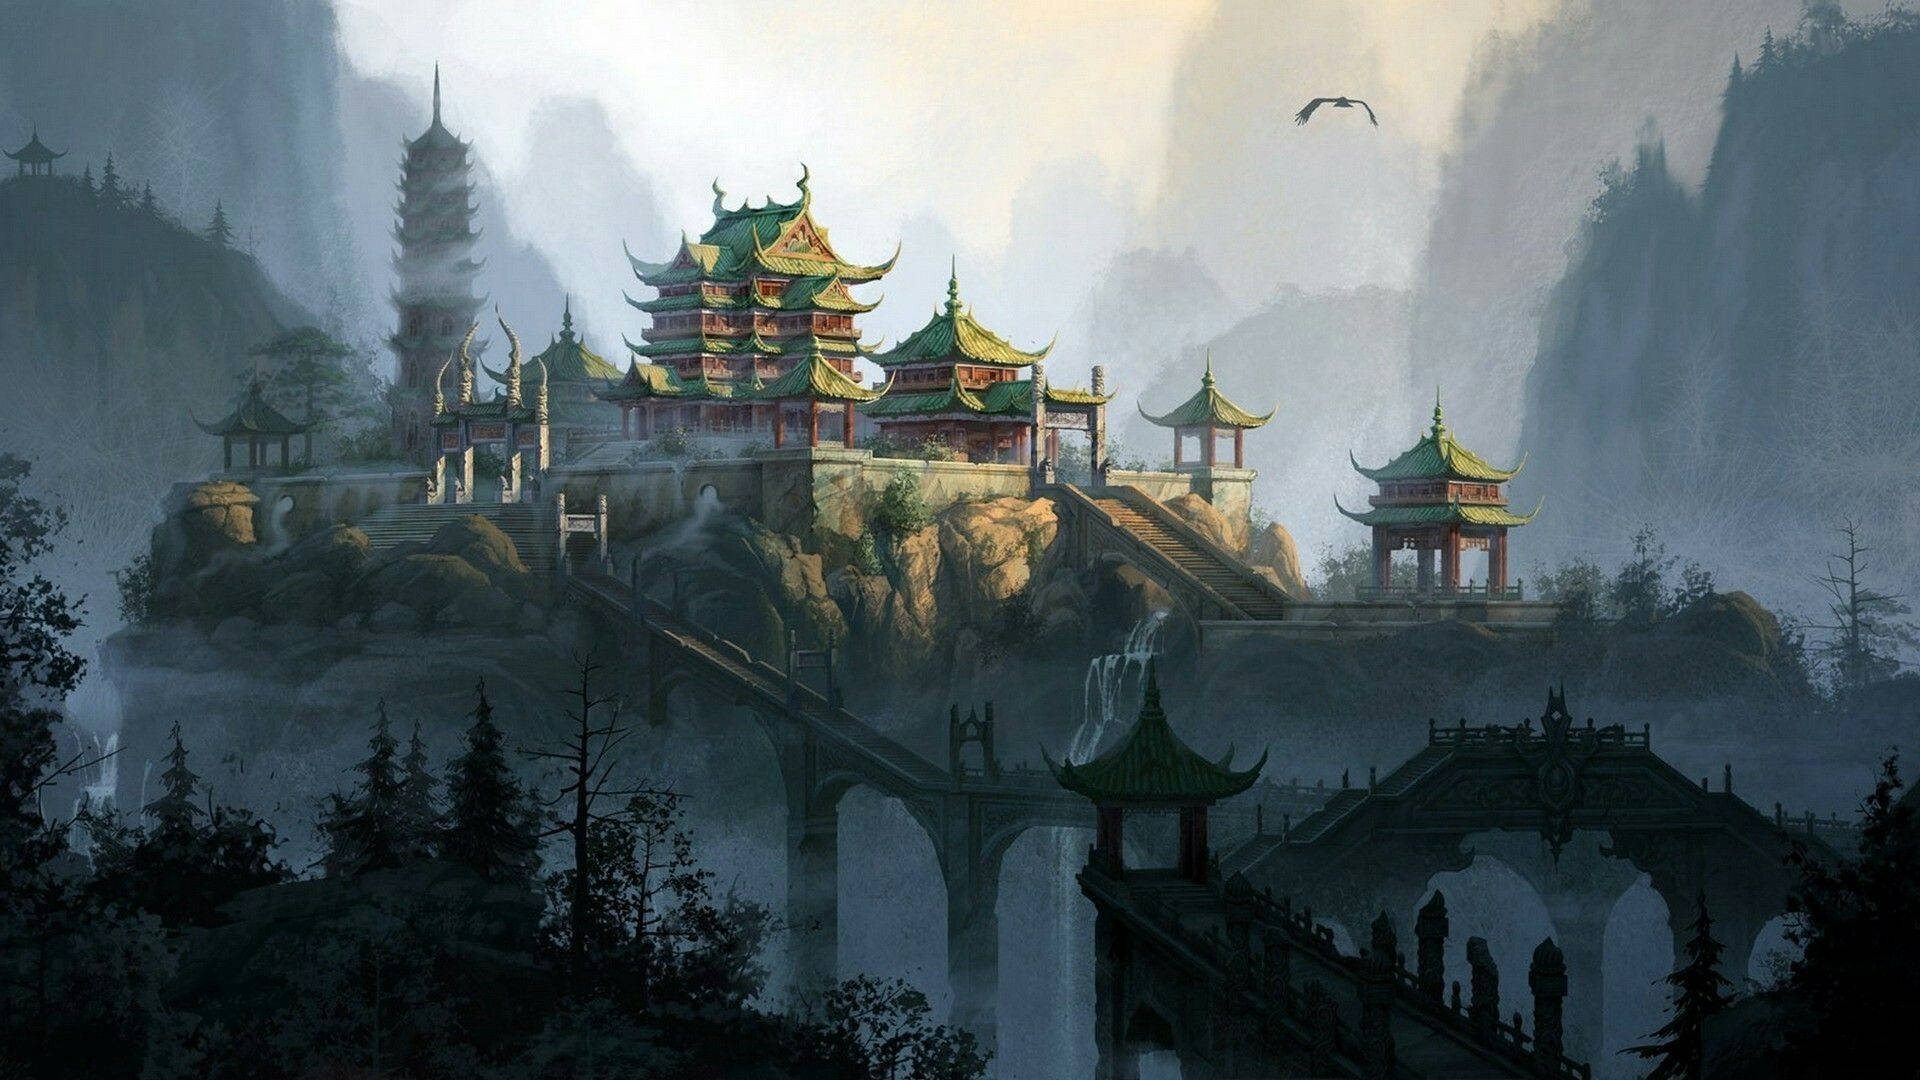 Chinatownlandskapskonst. Wallpaper